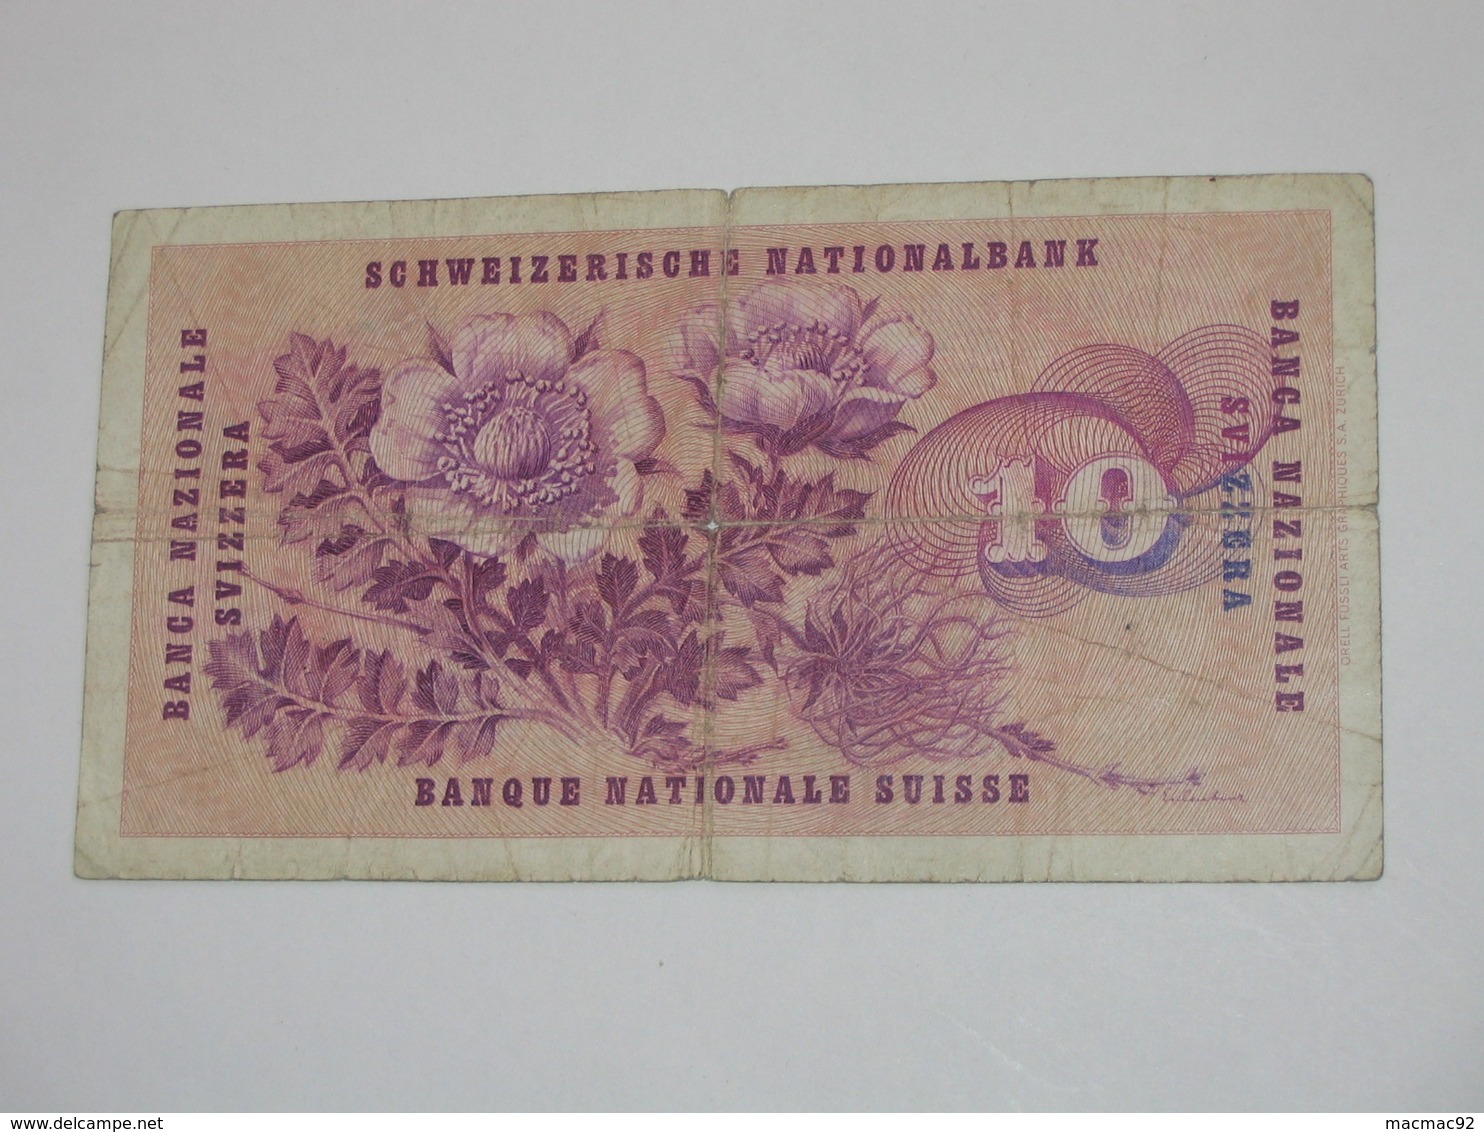 10 Francs SUISSE 1967 - Banque Nationale Suisse - Schweizerische Nationalbank   **** EN ACHAT IMMEDIAT ***** - Suisse